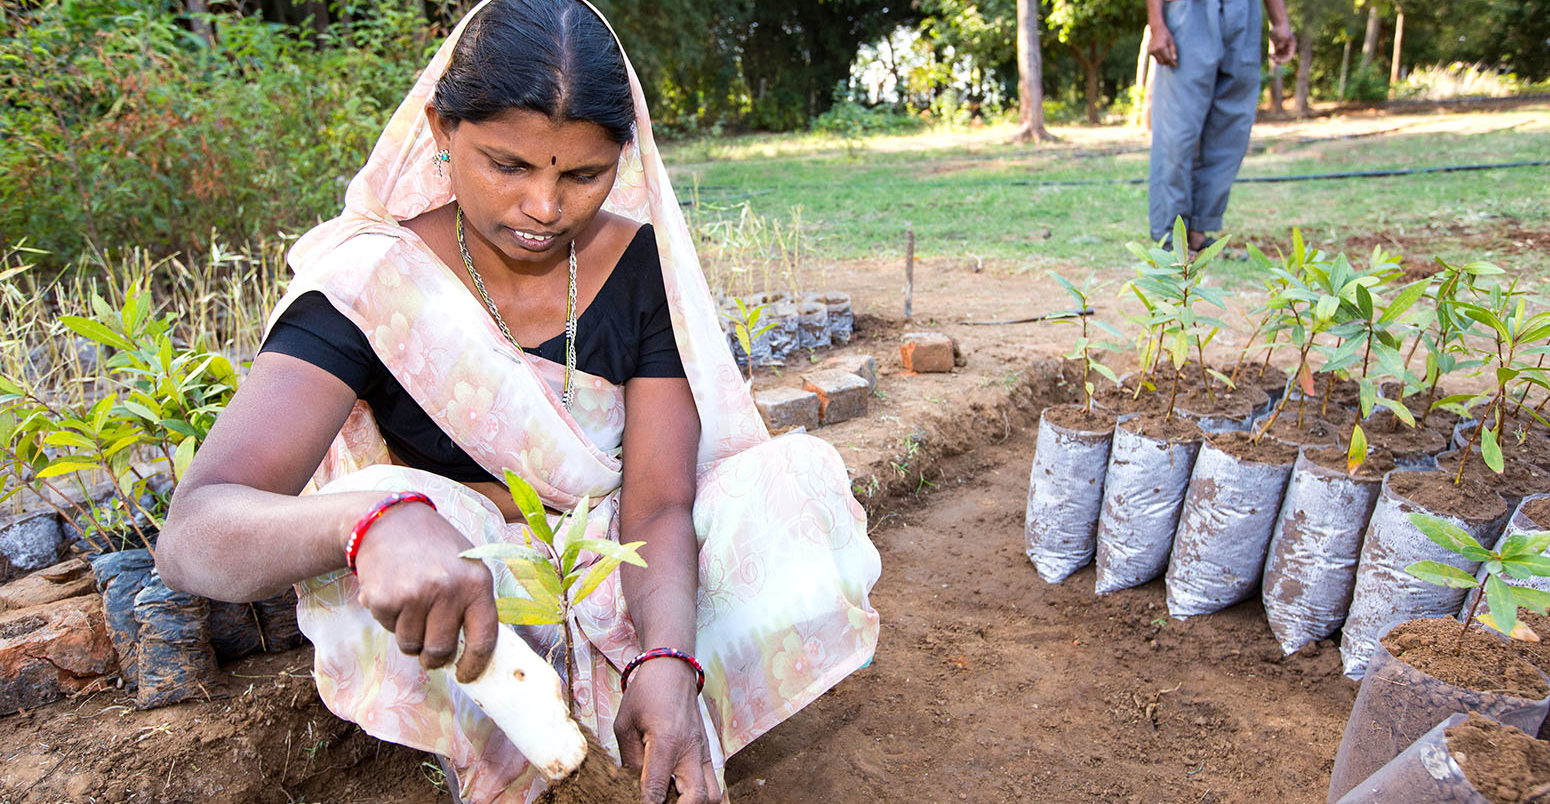 A woman plants trees in Goraj, India. Credit: Ashley Cooper pics / Alamy Stock Photo.